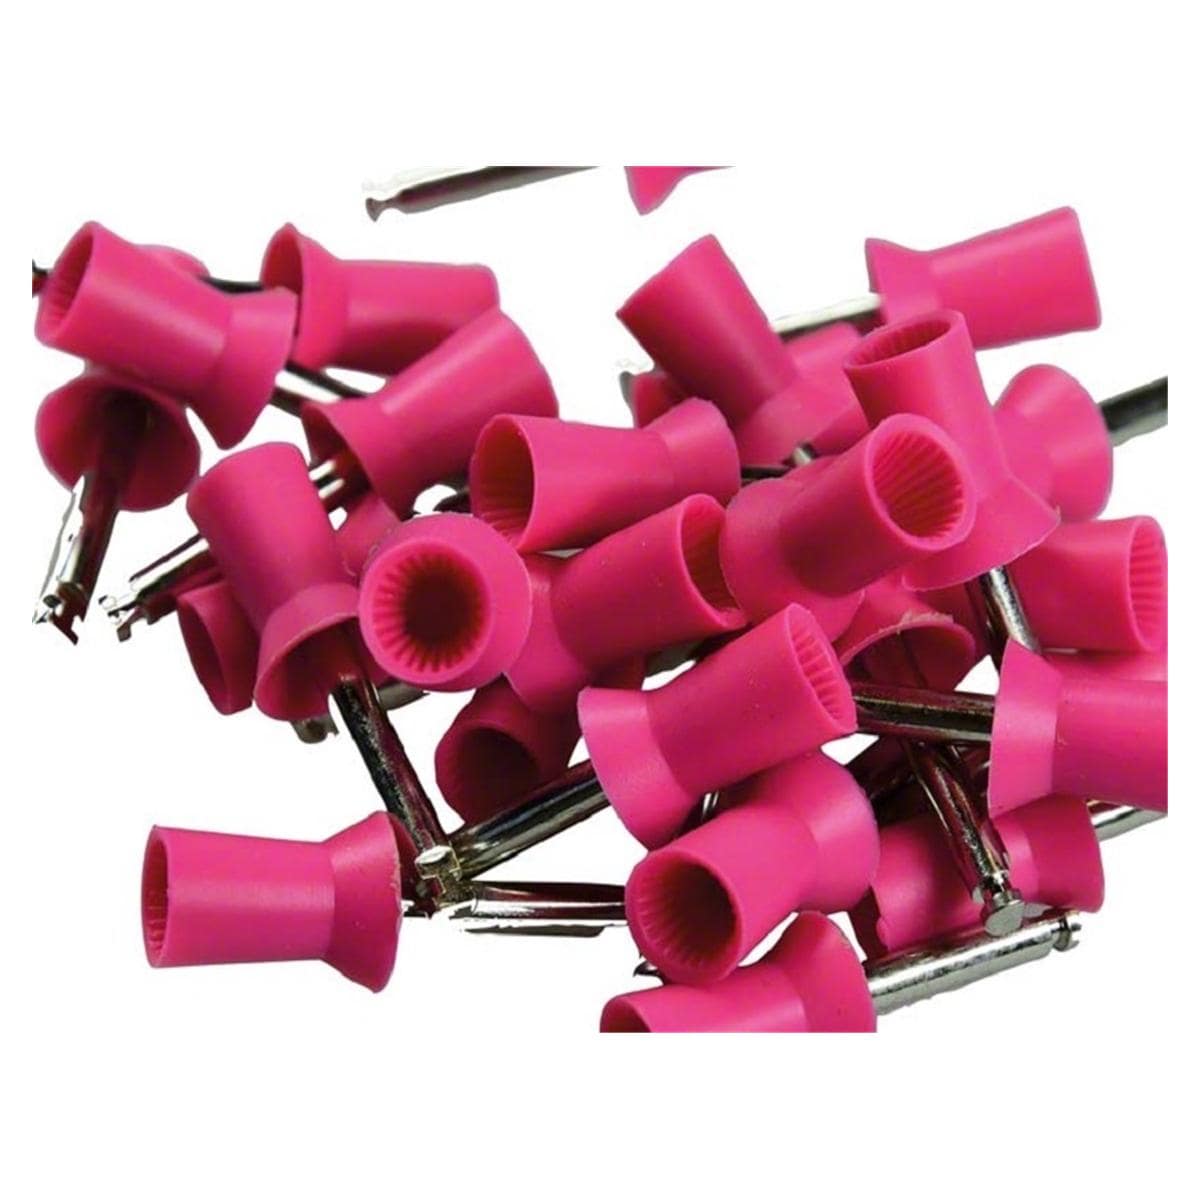 Latch-Type Cups - Gerippt, pink, hart, 9008/30, Packung 30 Stück